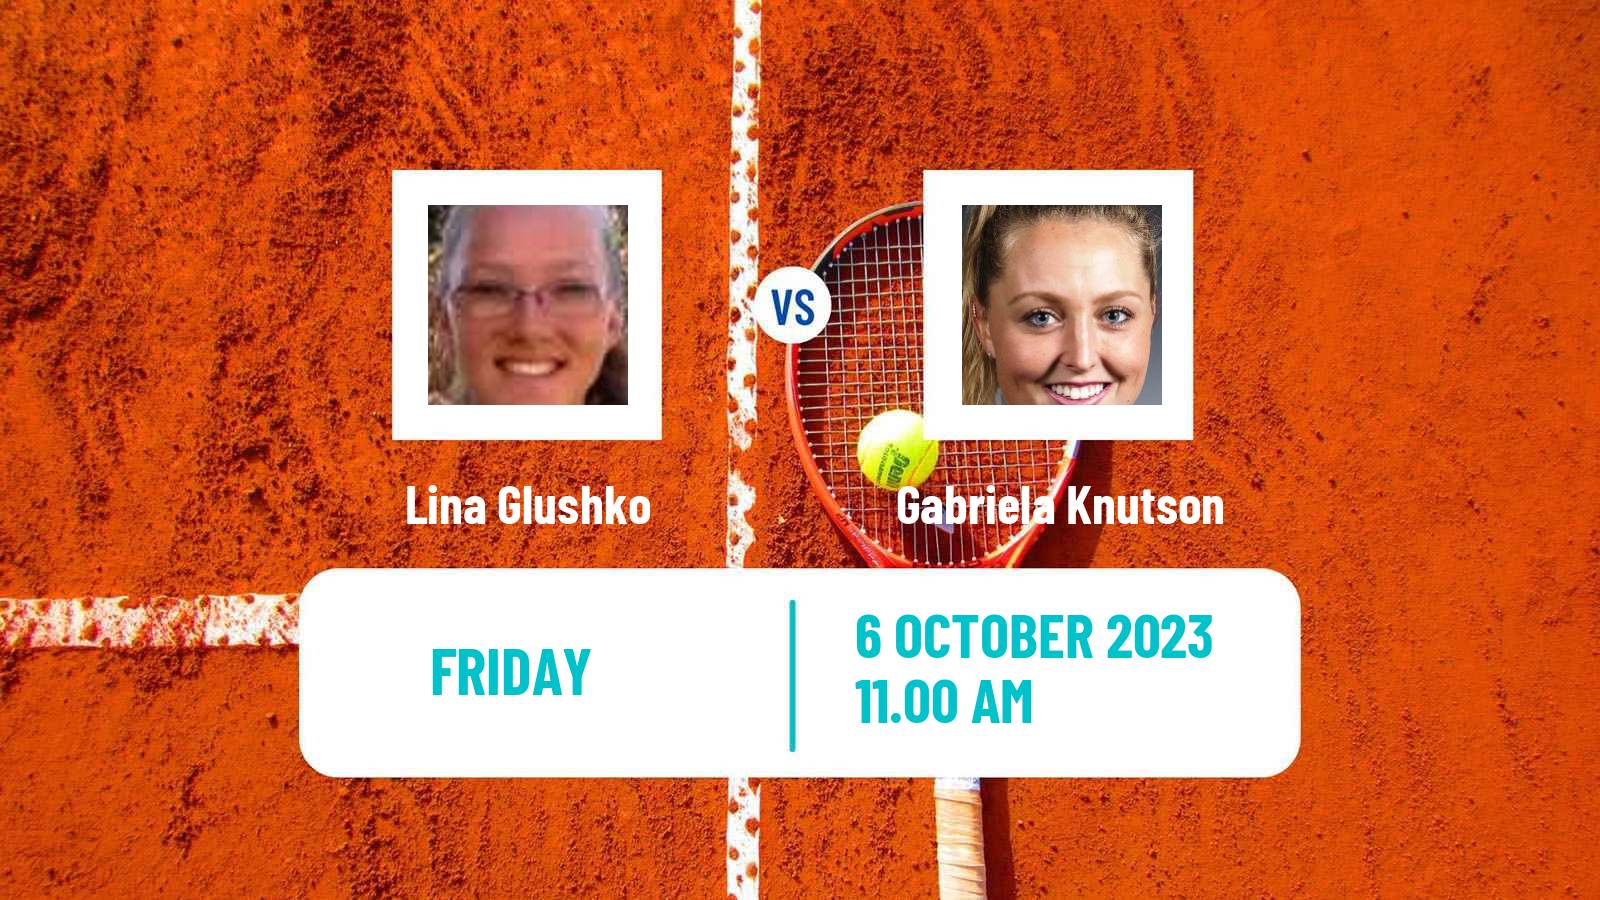 Tennis ITF W25 Baza Women Lina Glushko - Gabriela Knutson